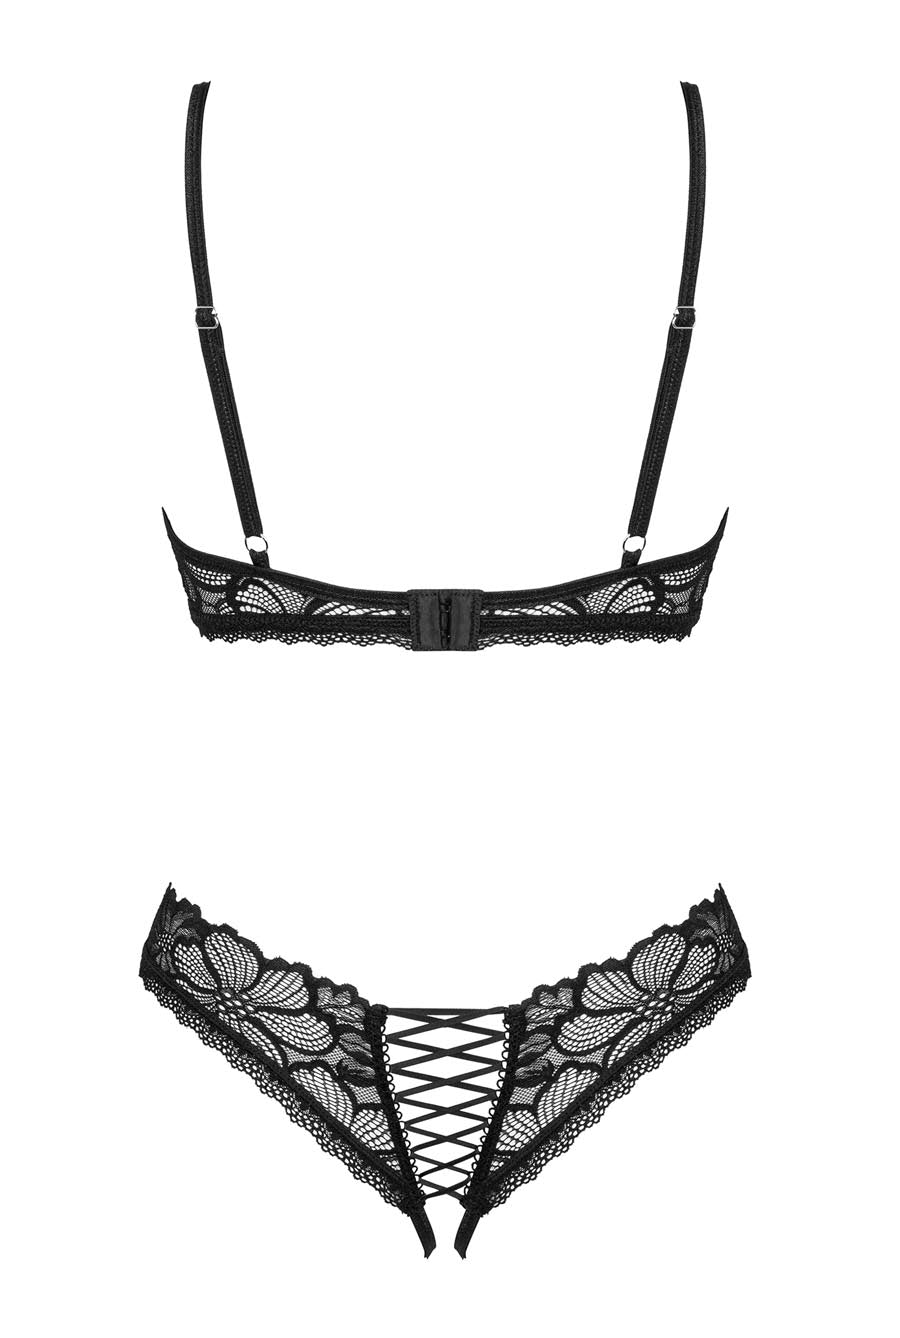 crotchless black lingerie set